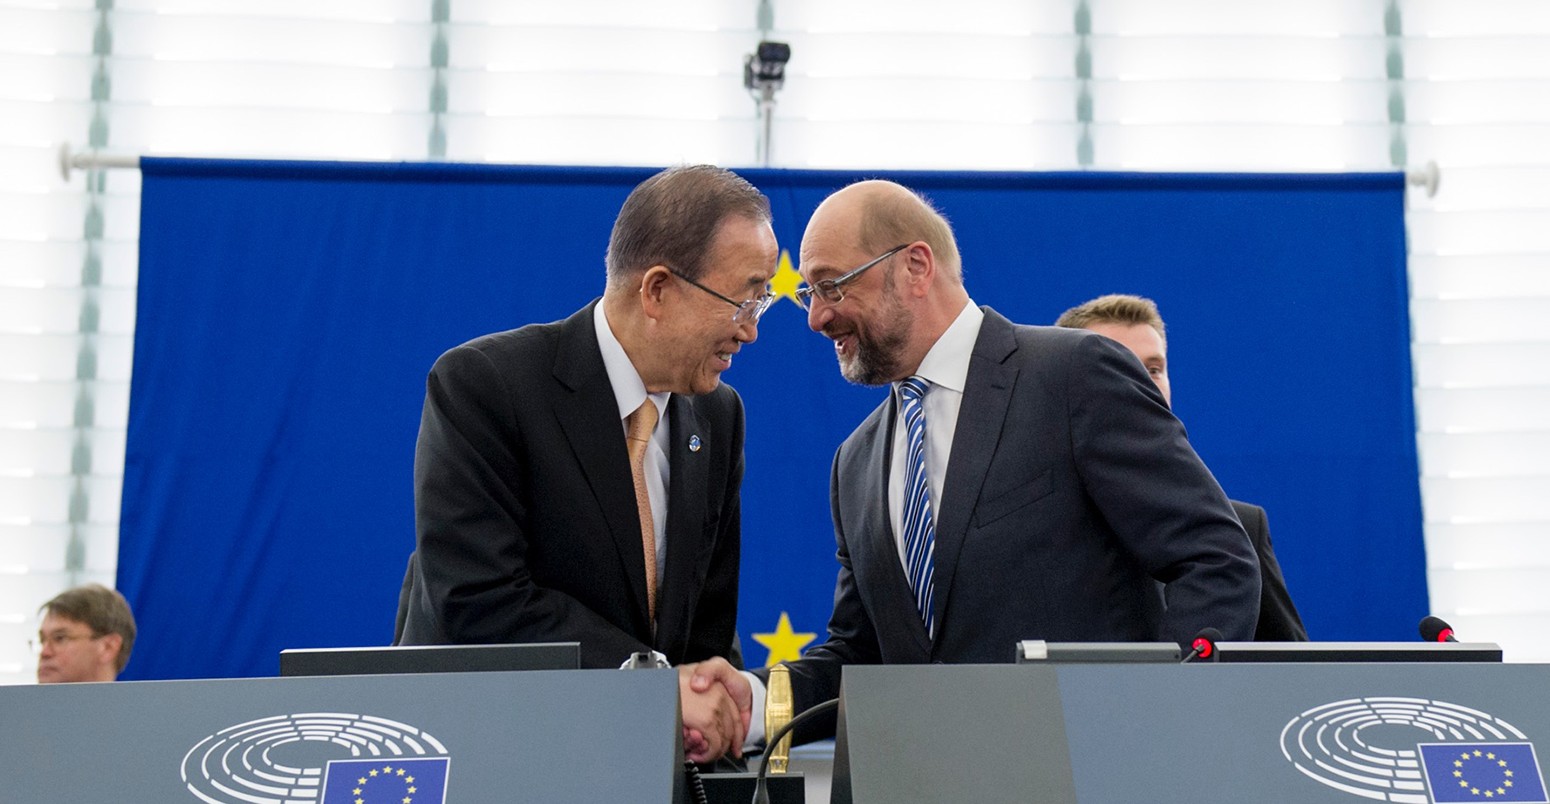 Ban Ki-moon addresses the European Parliament on the Paris Agreement, Oct 4 2016